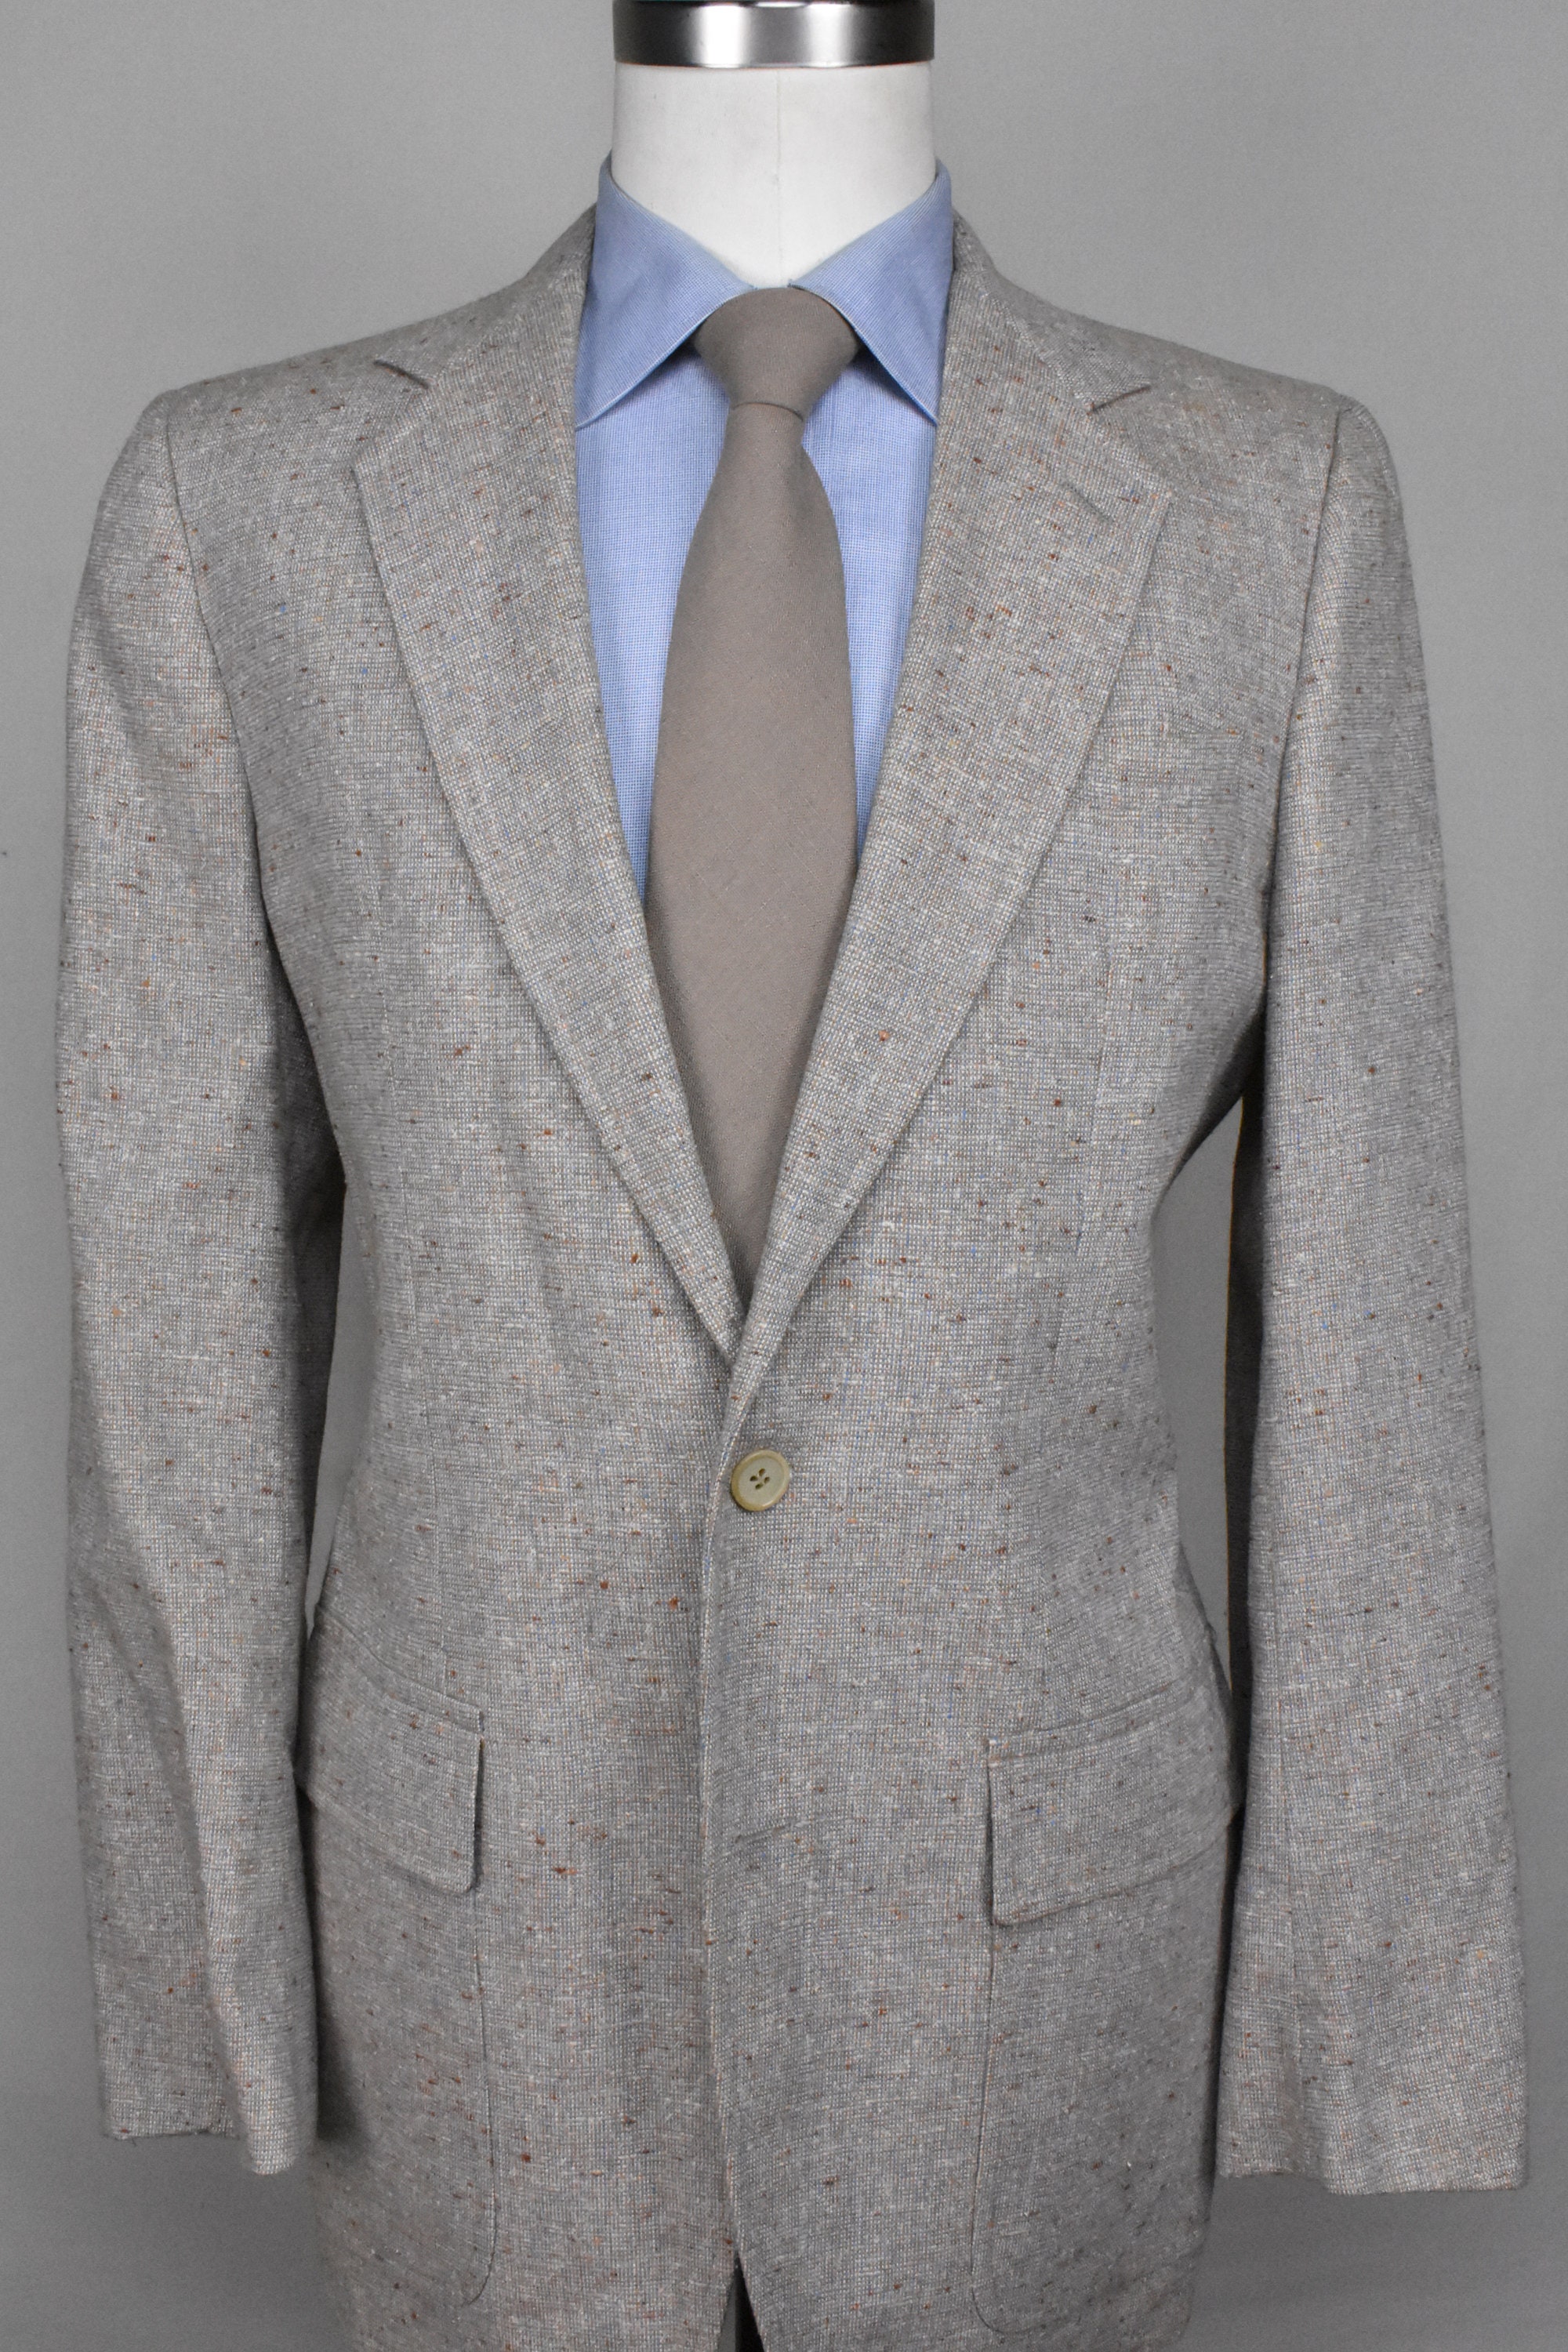 1970's Mavest Beige/Tan Wool Blend Two Button Sport Coat Men's Size 38R